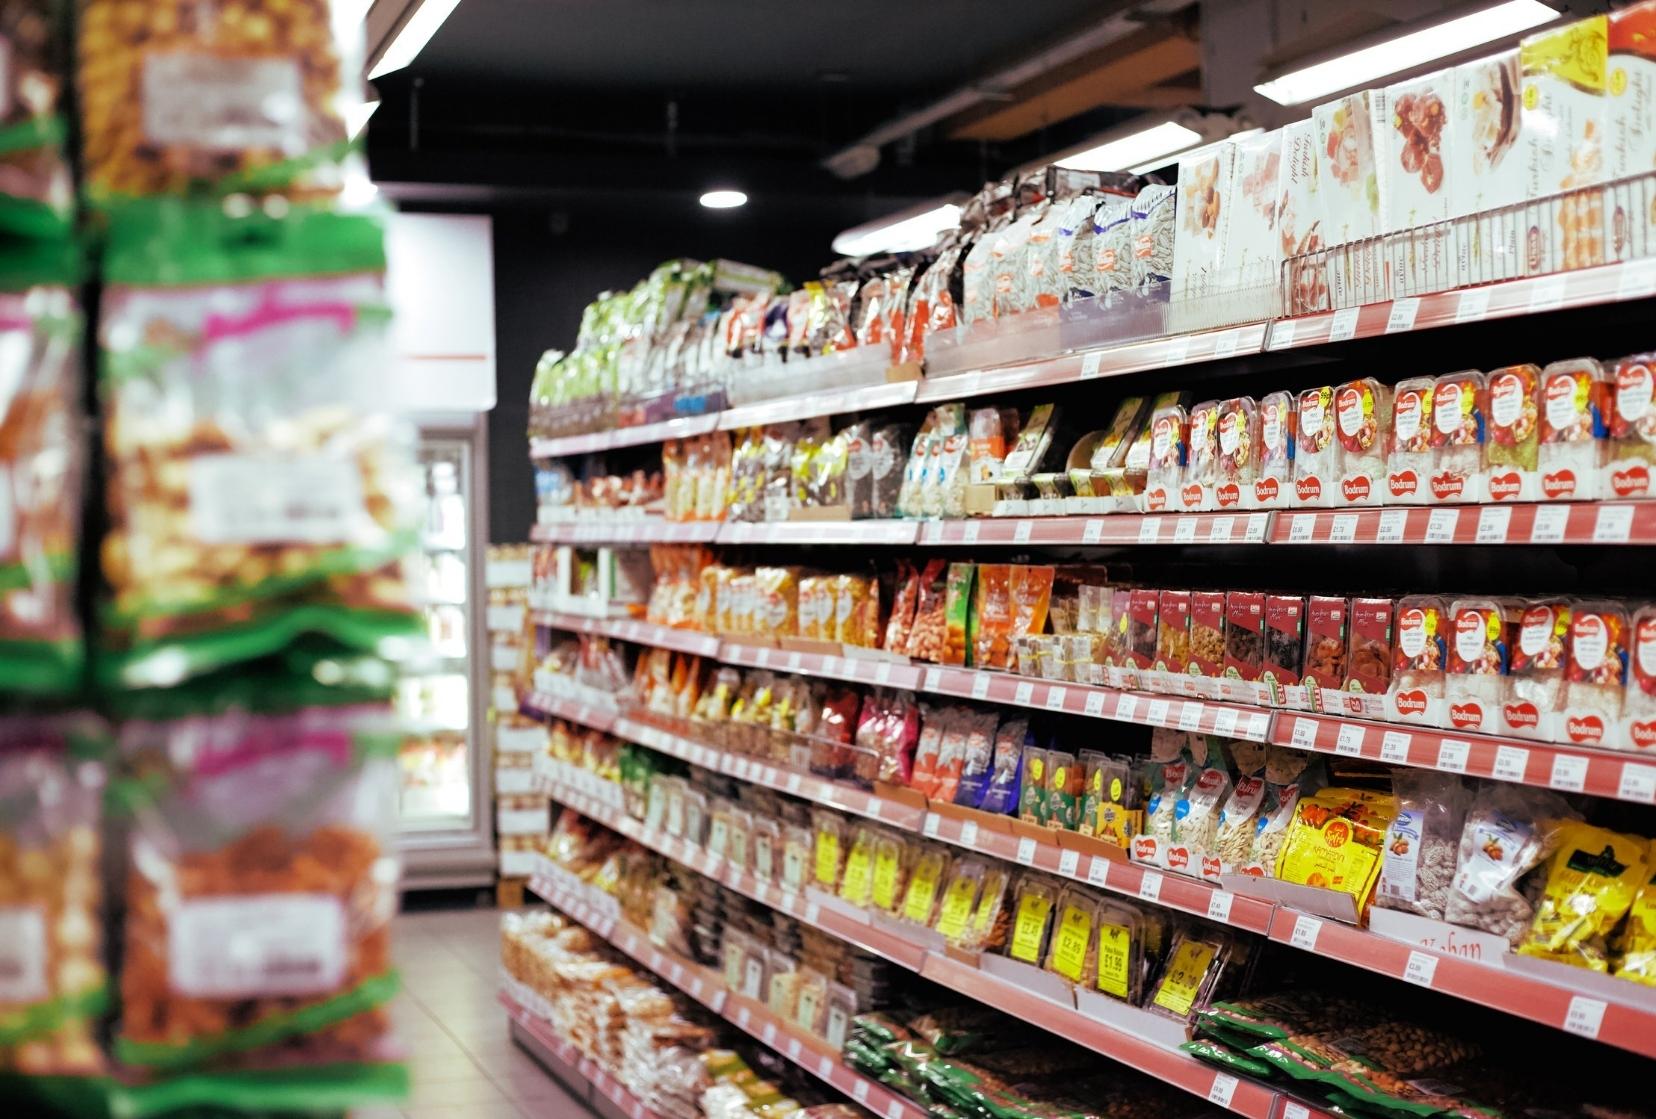 refrigeration health in Supermarkets and Hypermarkets